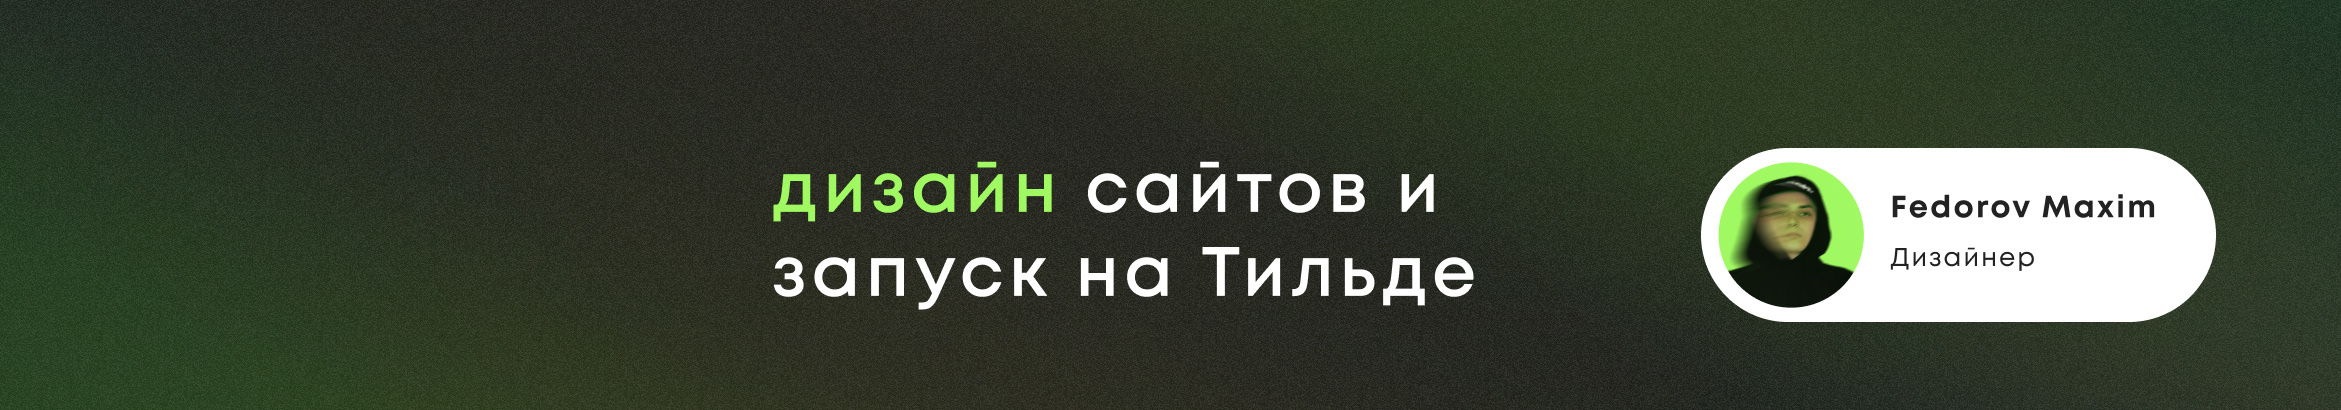 Maxim Fedorov's profile banner